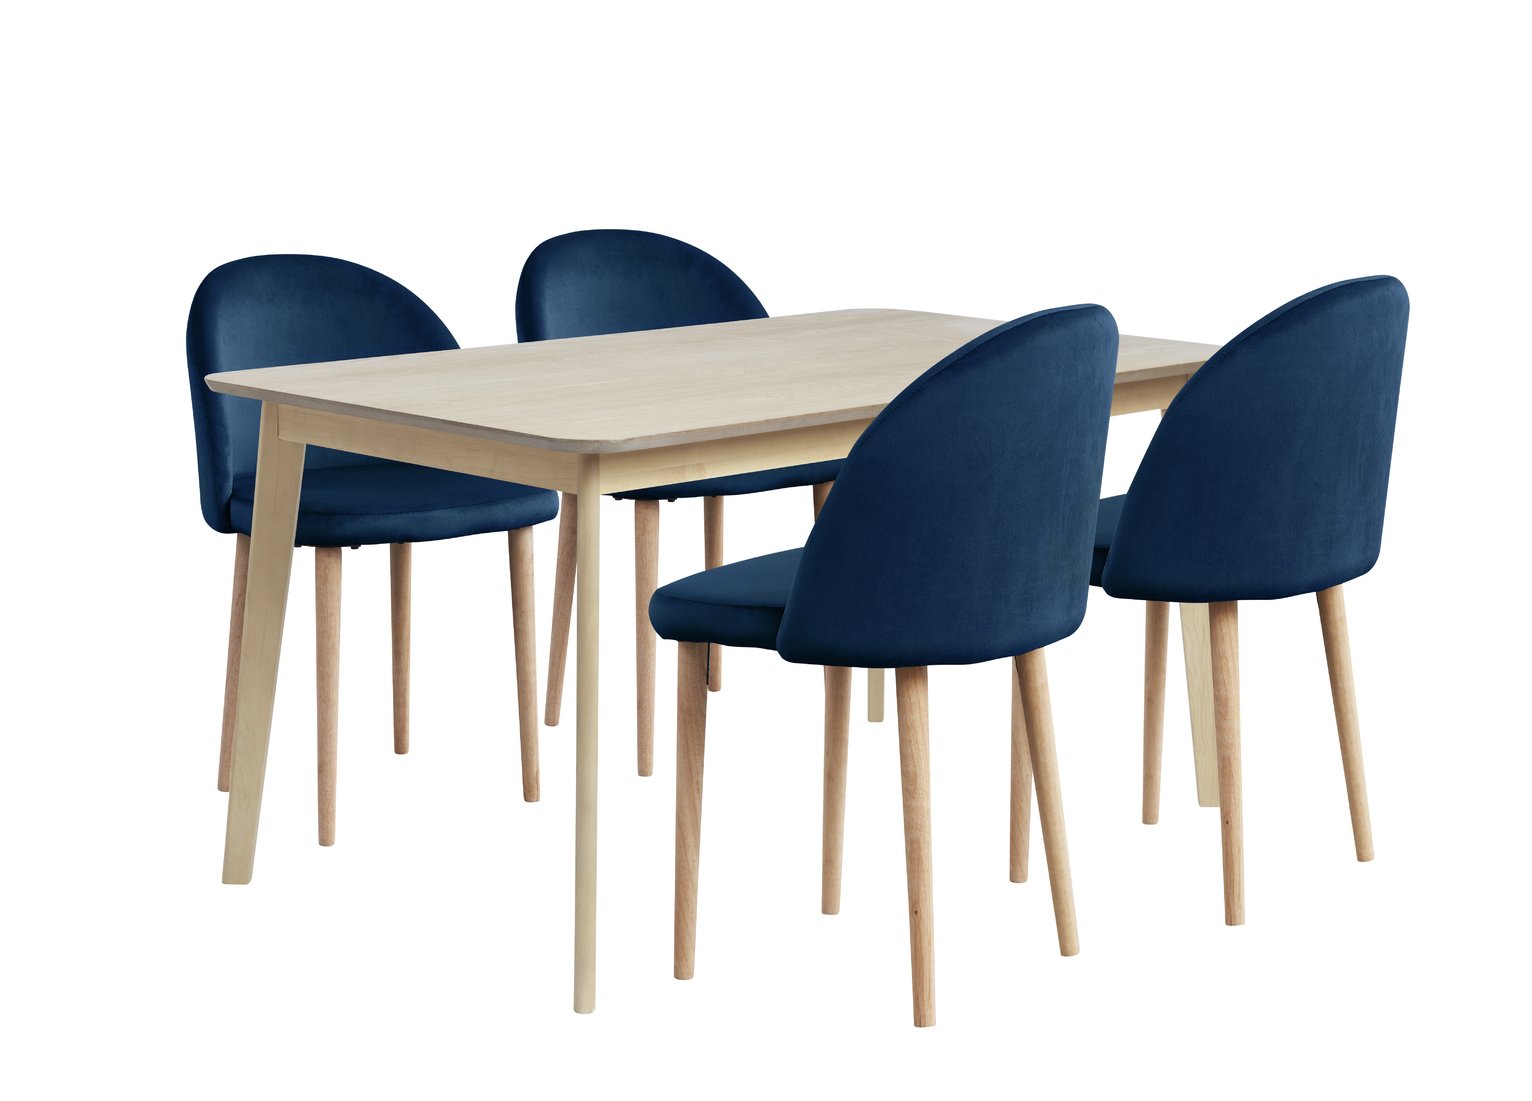 Habitat Skandi Solid Wood Dining Table & 4 Navy Chairs